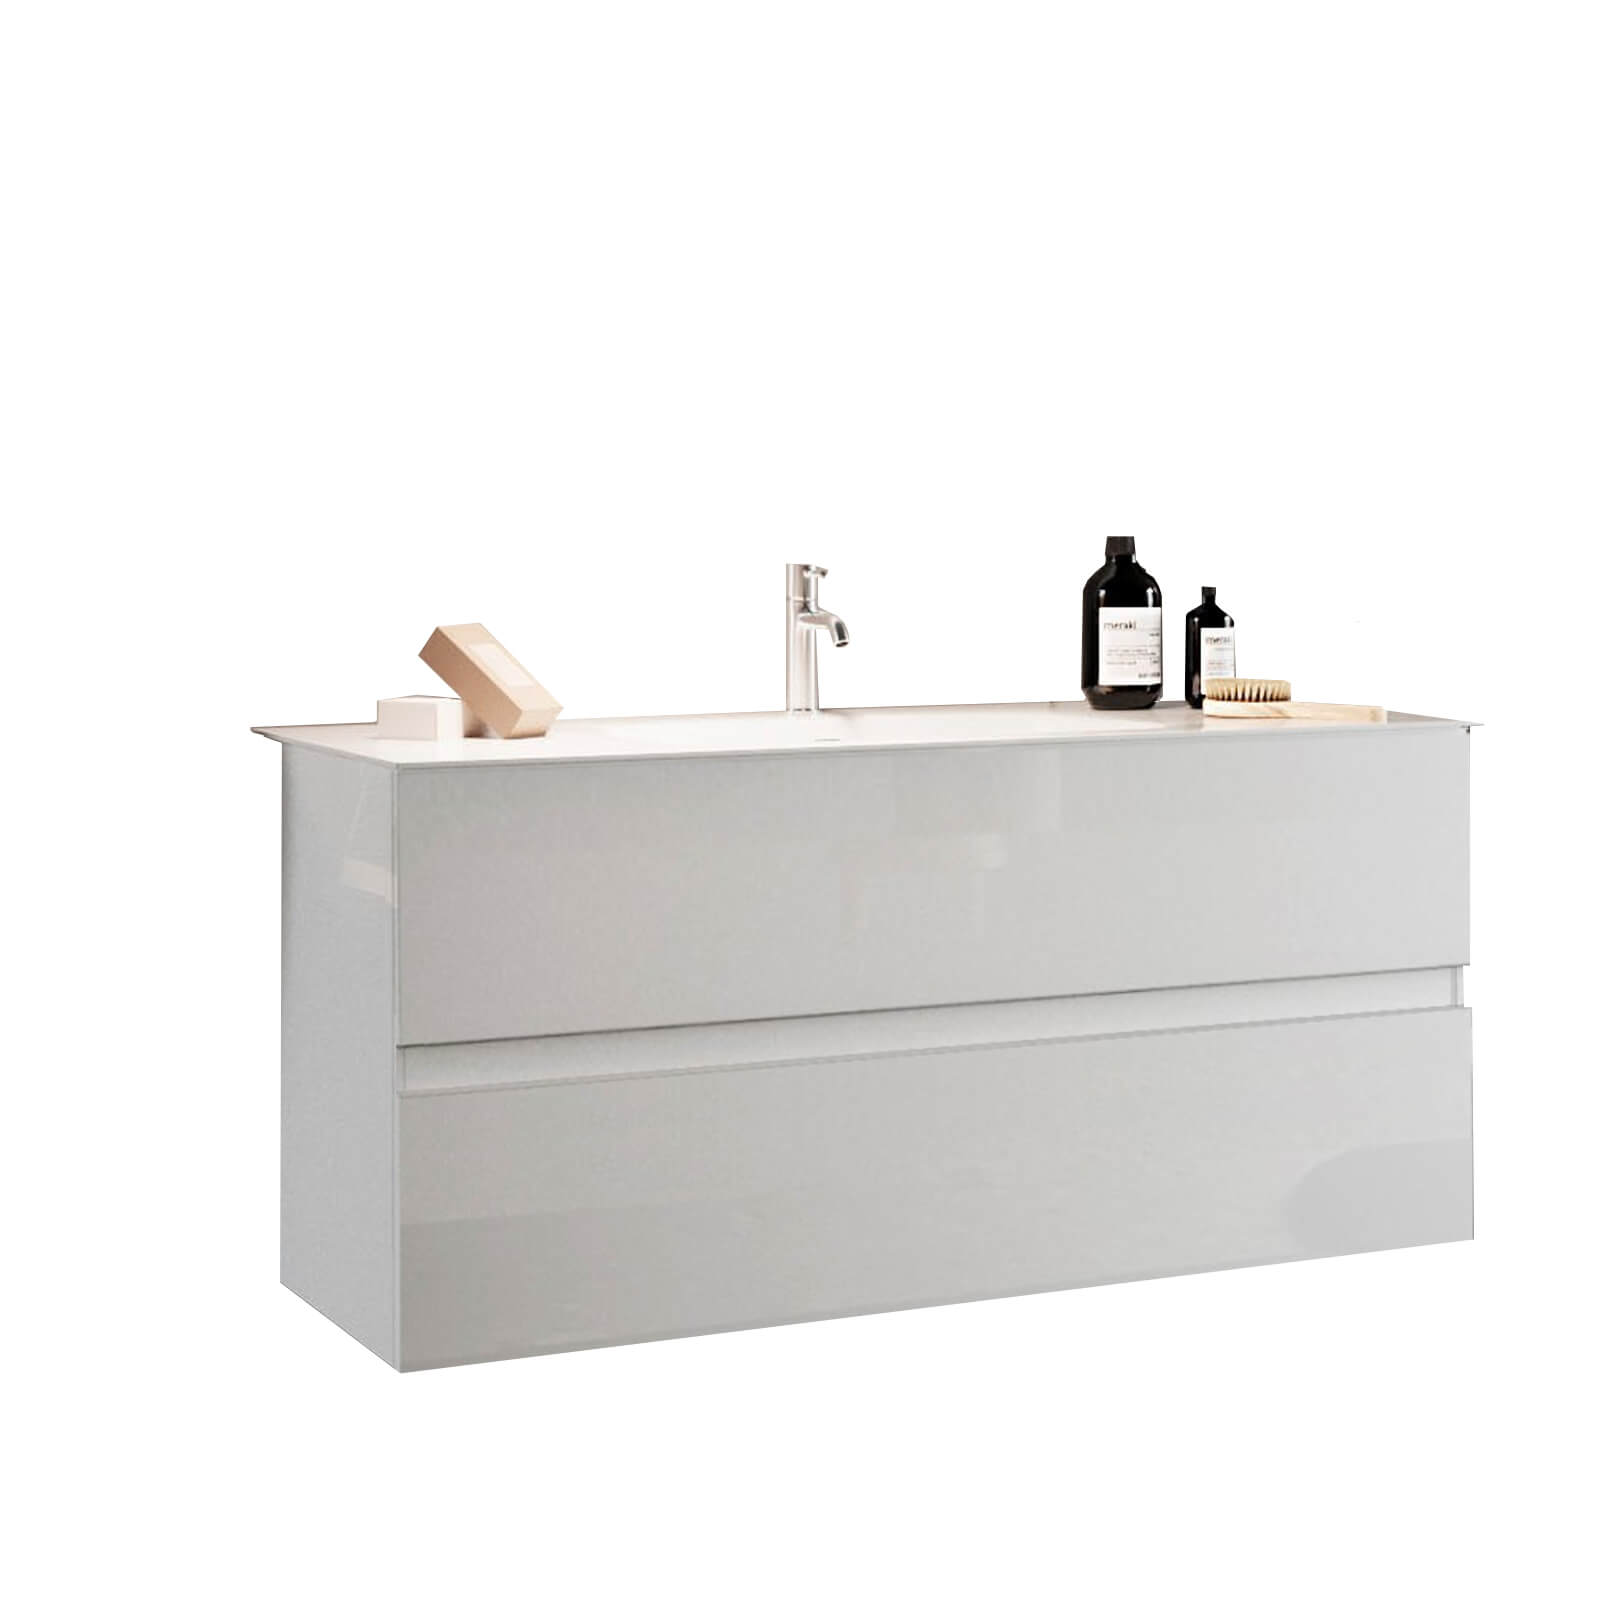 Milani Home mobile lavabo sospeso di design moderno industrial Bianco 101 x 45 x 85 cm